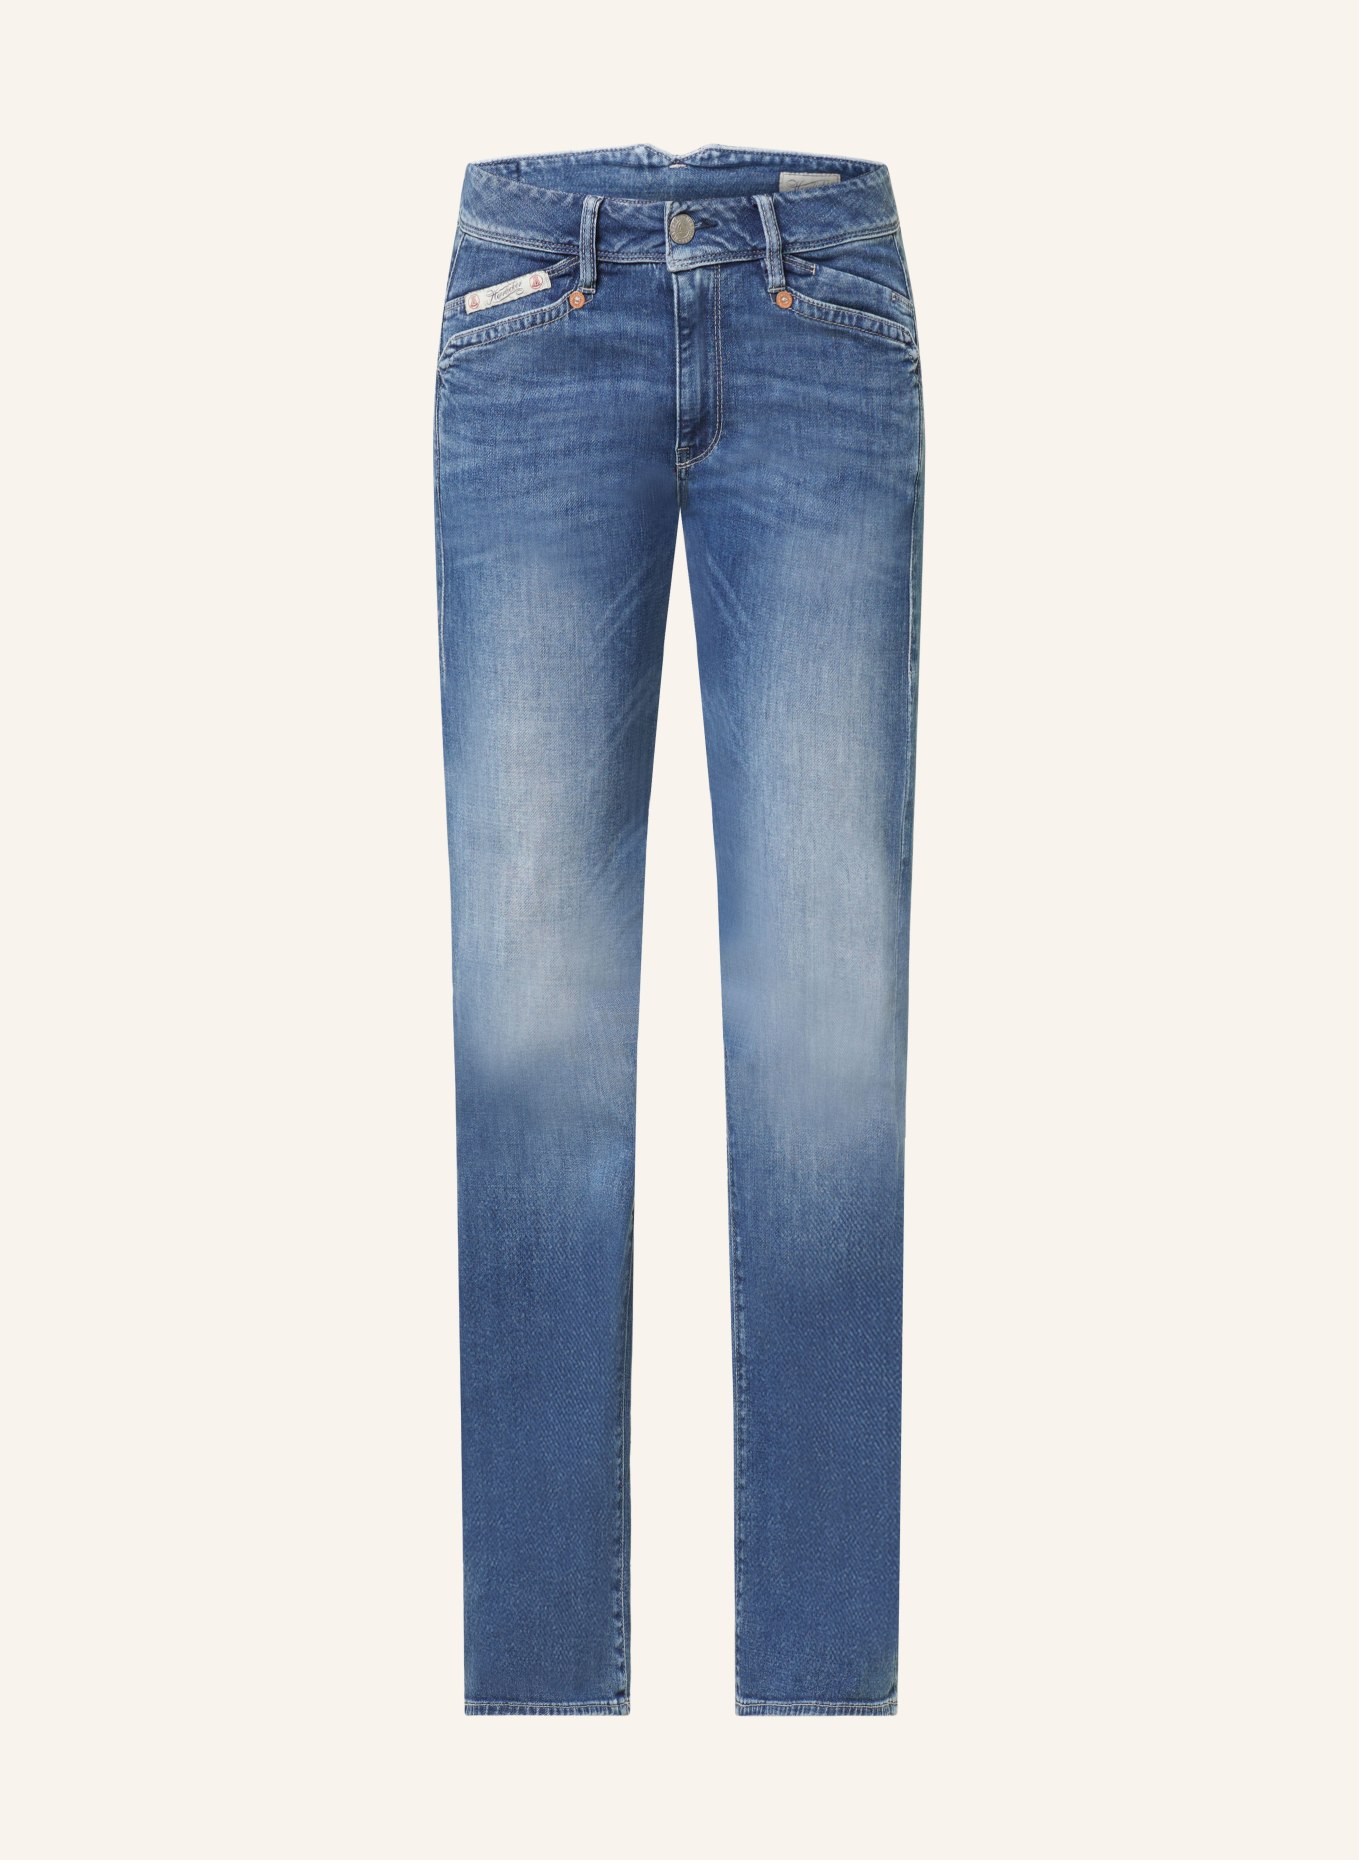 Herrlicher Jeans PRIME, Farbe: 955 casper (Bild 1)